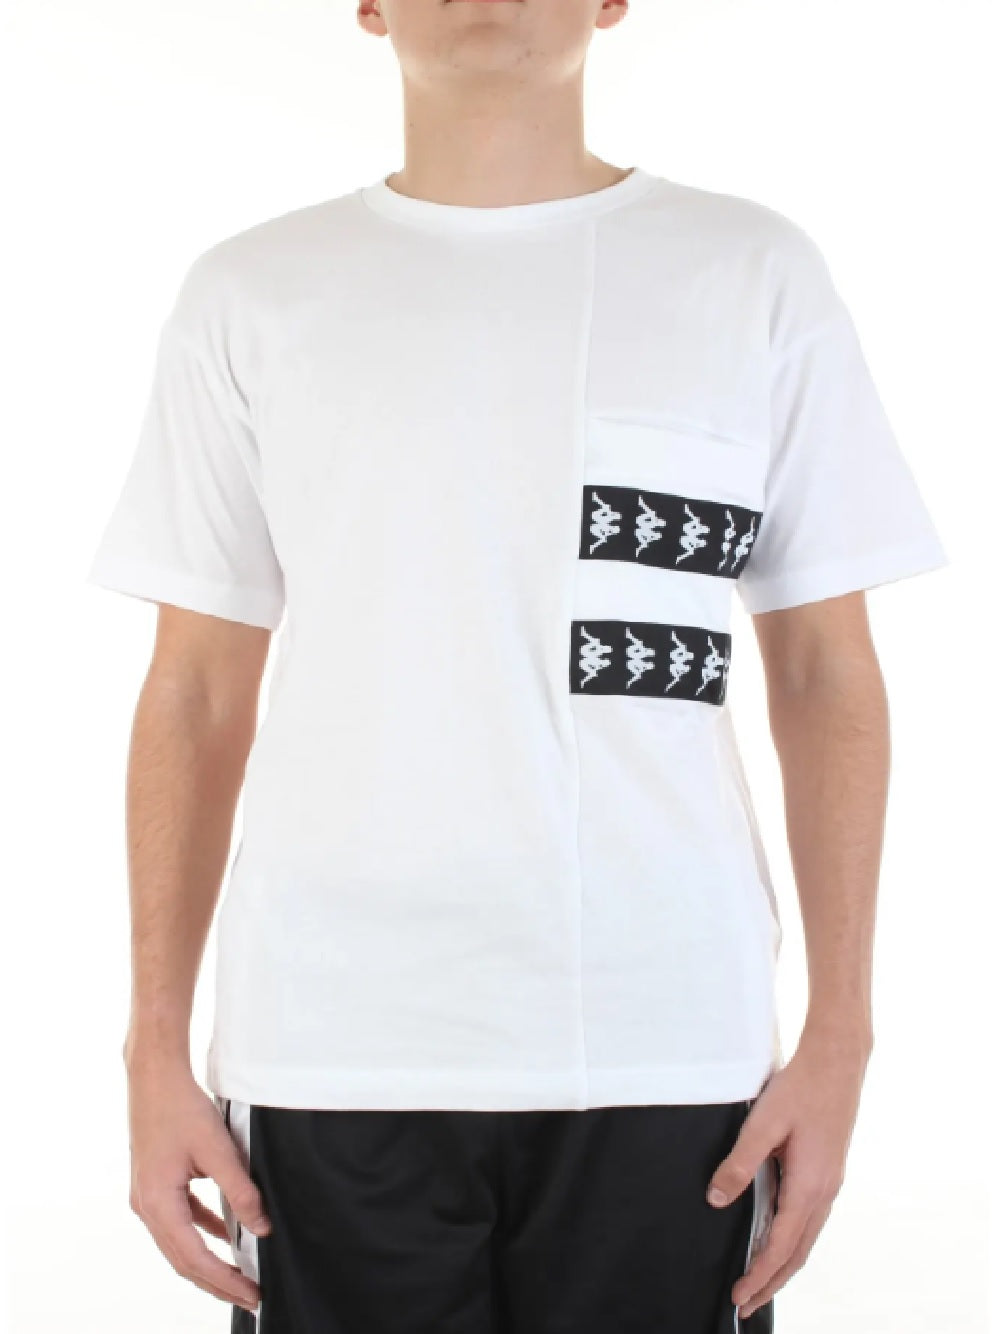 T-shirt Kappa Unisex Adulto 3117CJW BZC